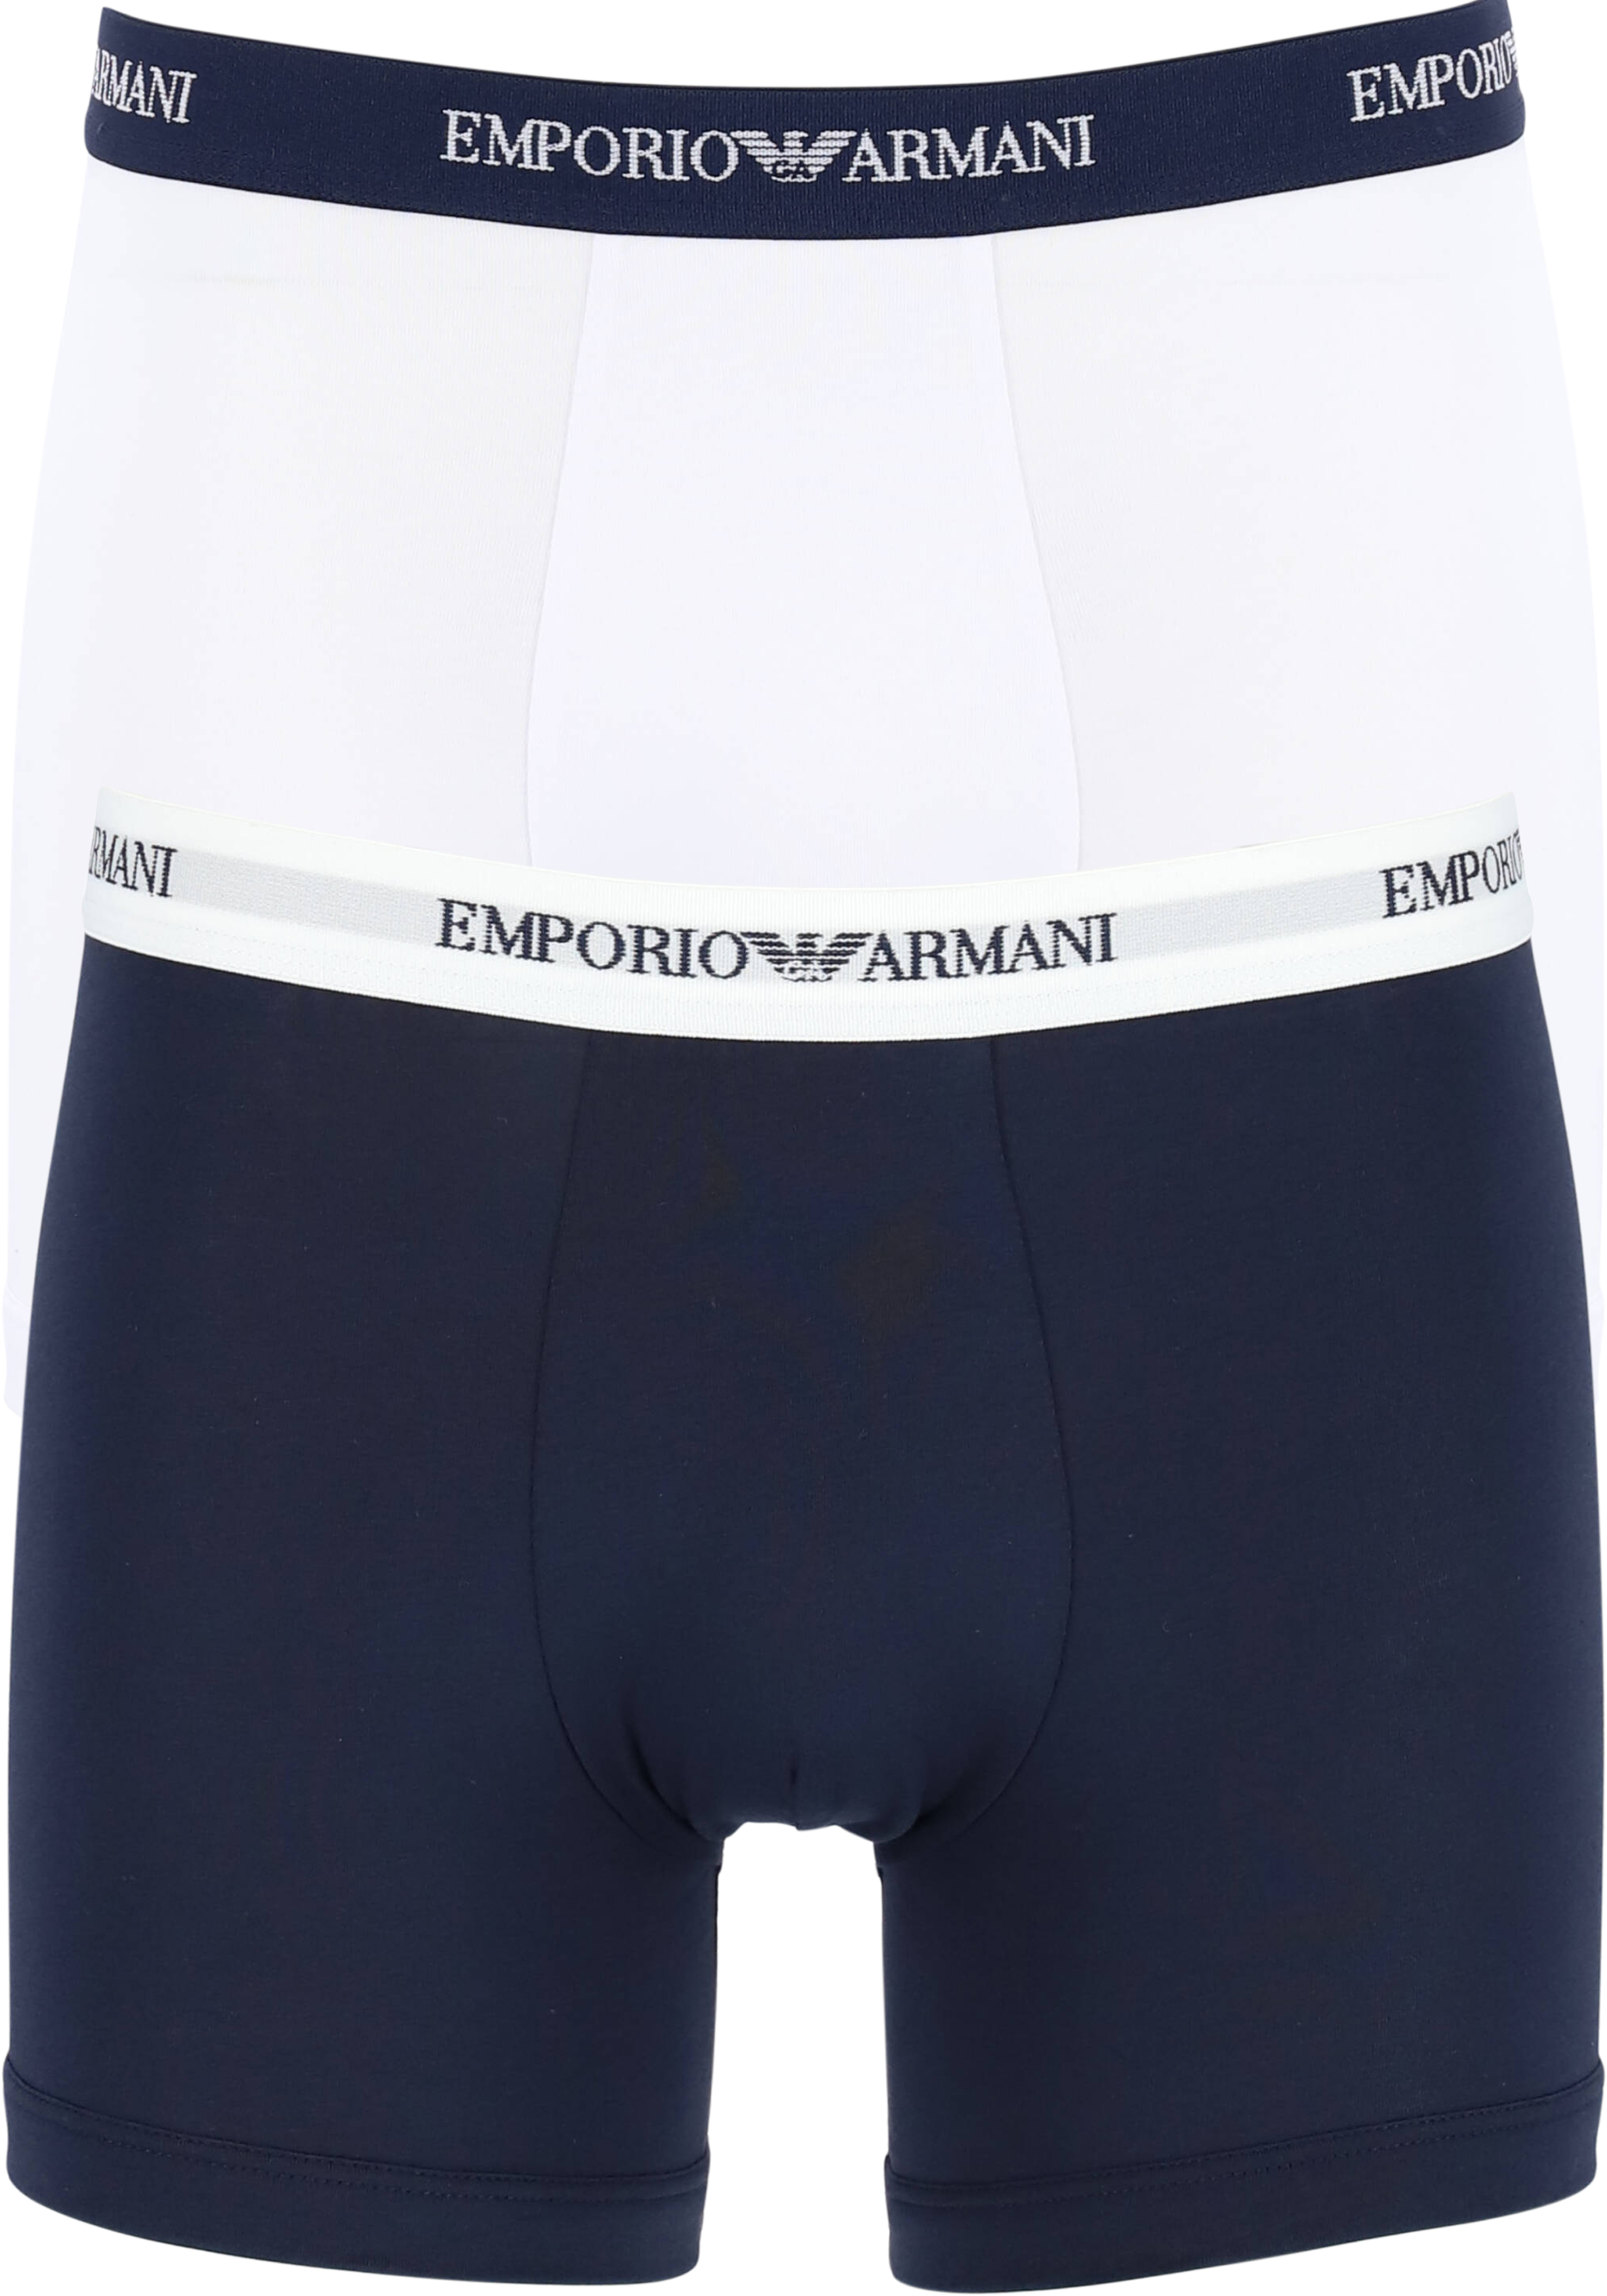 Emporio Armani Boxers Essential Core (2-pack), heren boxers normale lengte, blauw en wit